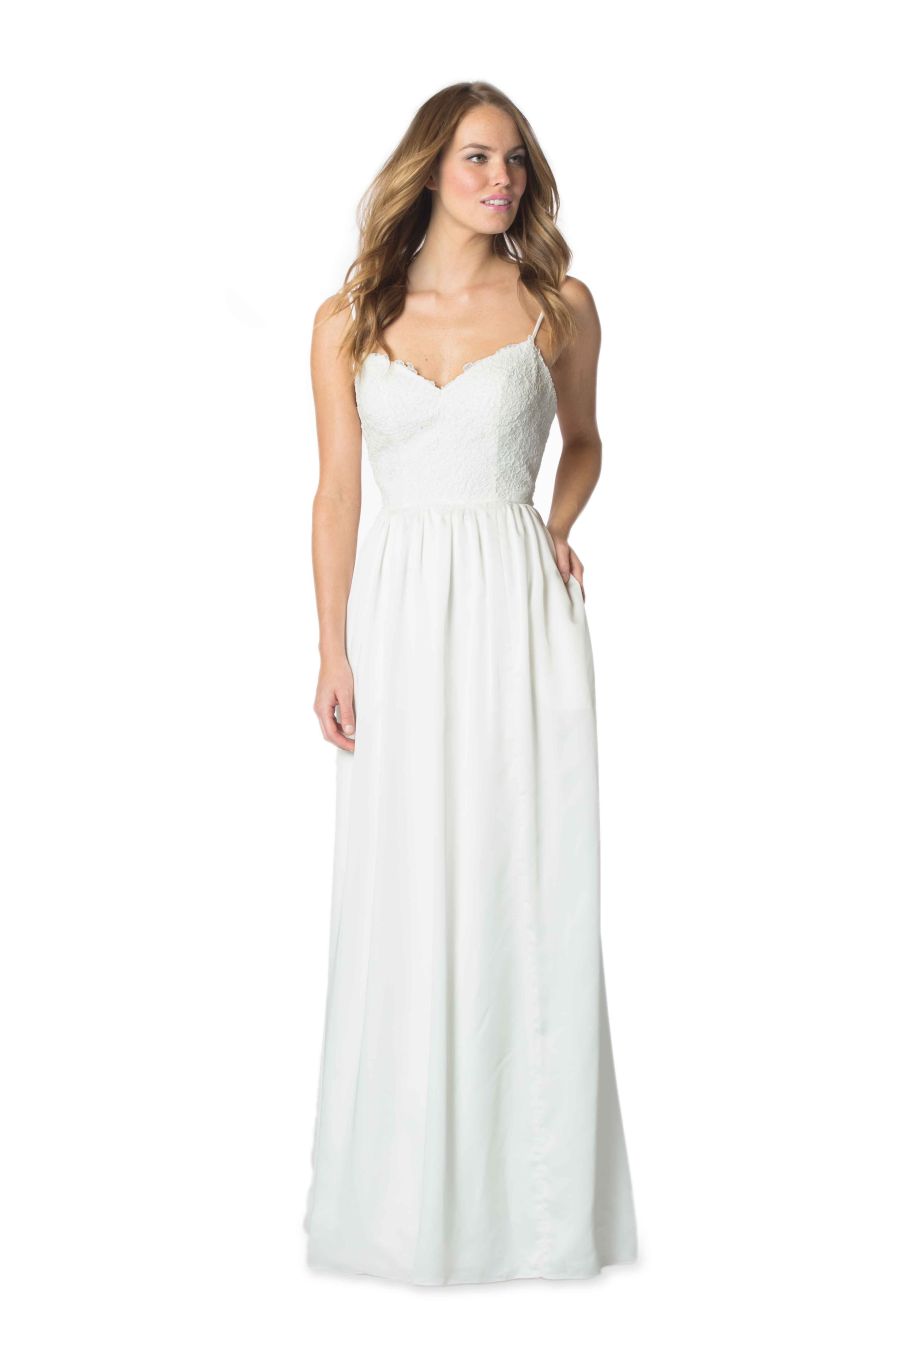 Bari Jay Whites 2056 Corded Lace Casual Wedding Dress: French Novelty